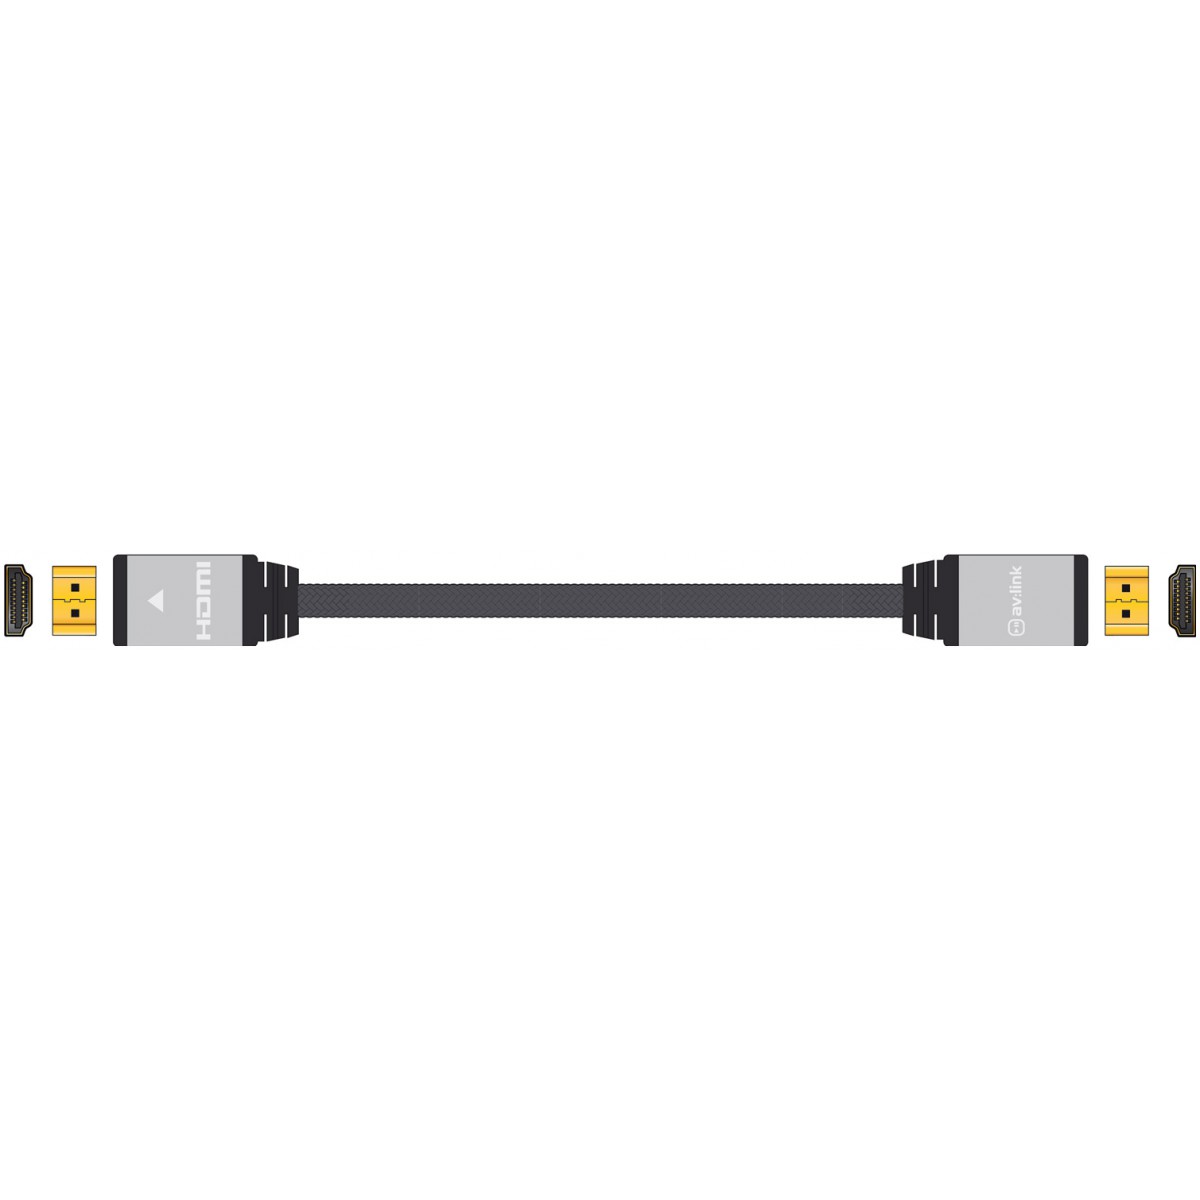 AV:Link Prémiový HDMI kabel s podporou 4K, 5m